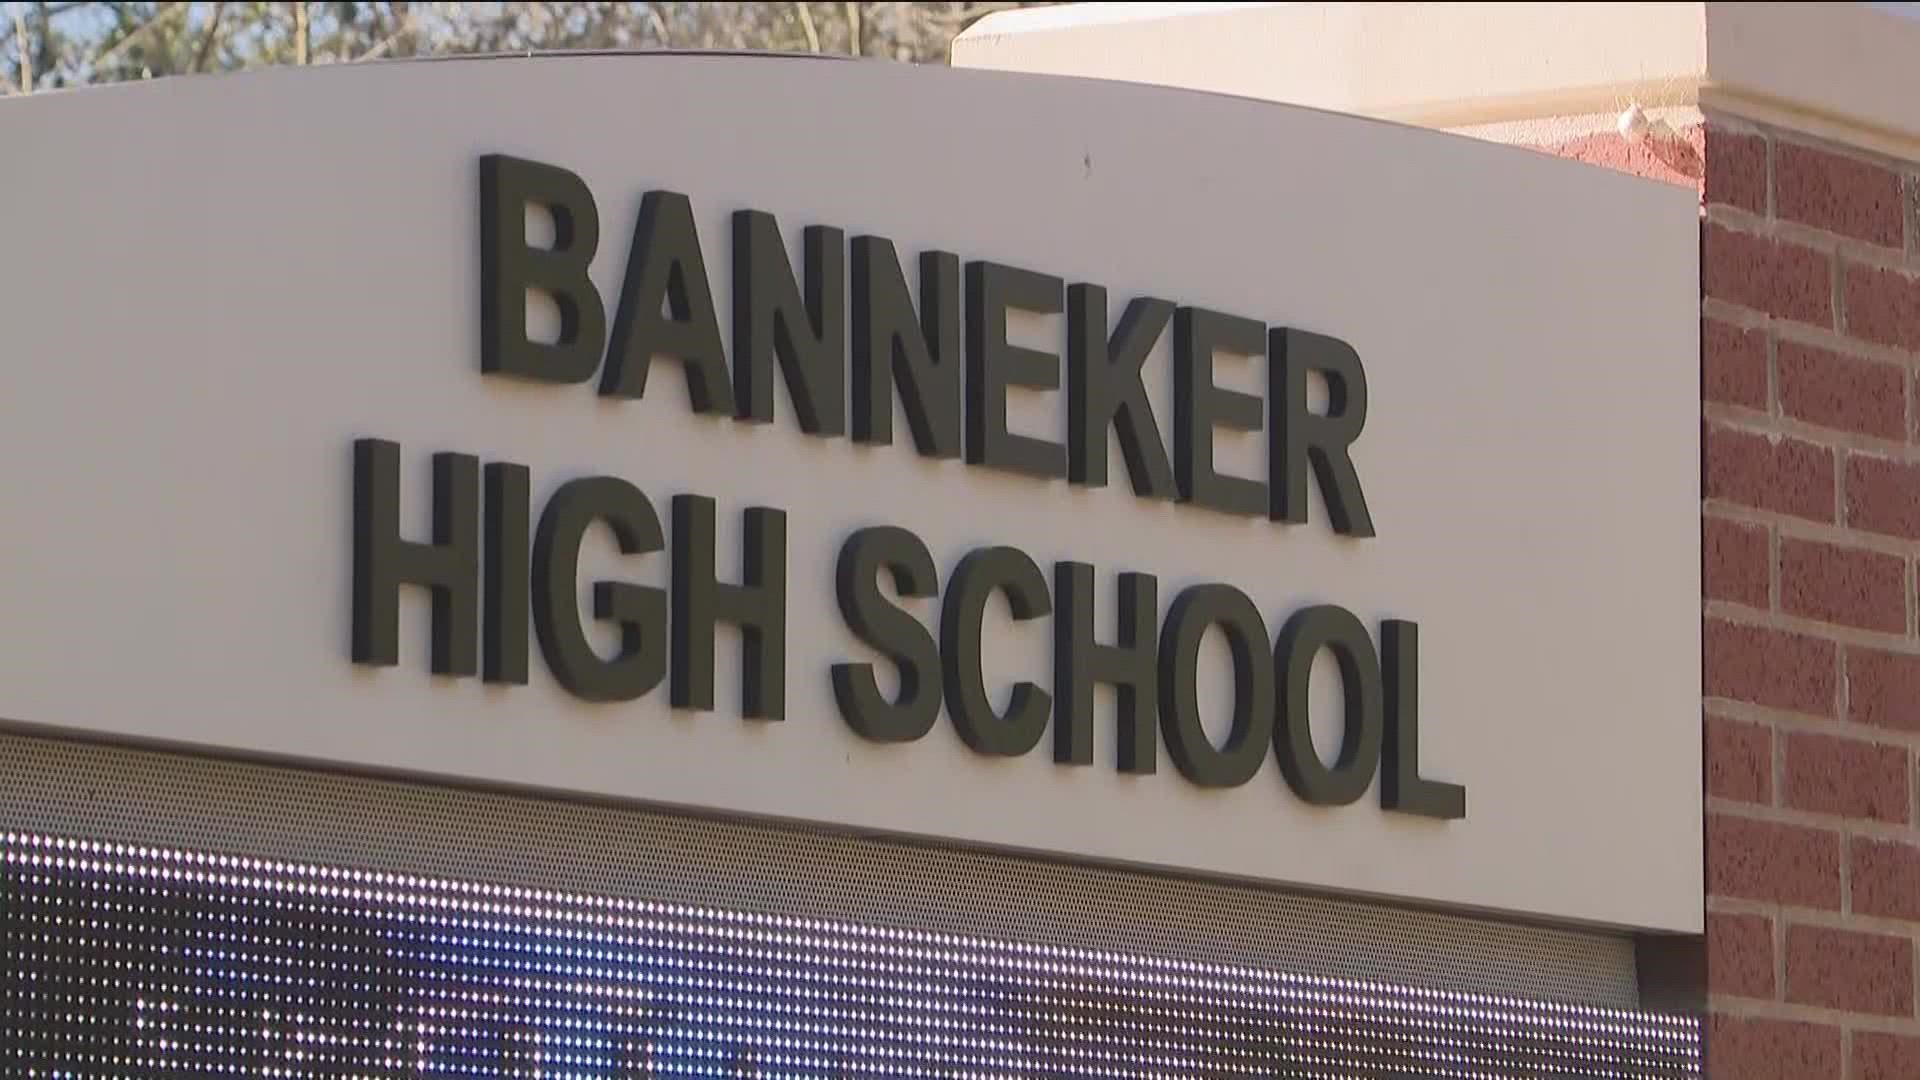 It happened at Banneker High School near College Park.